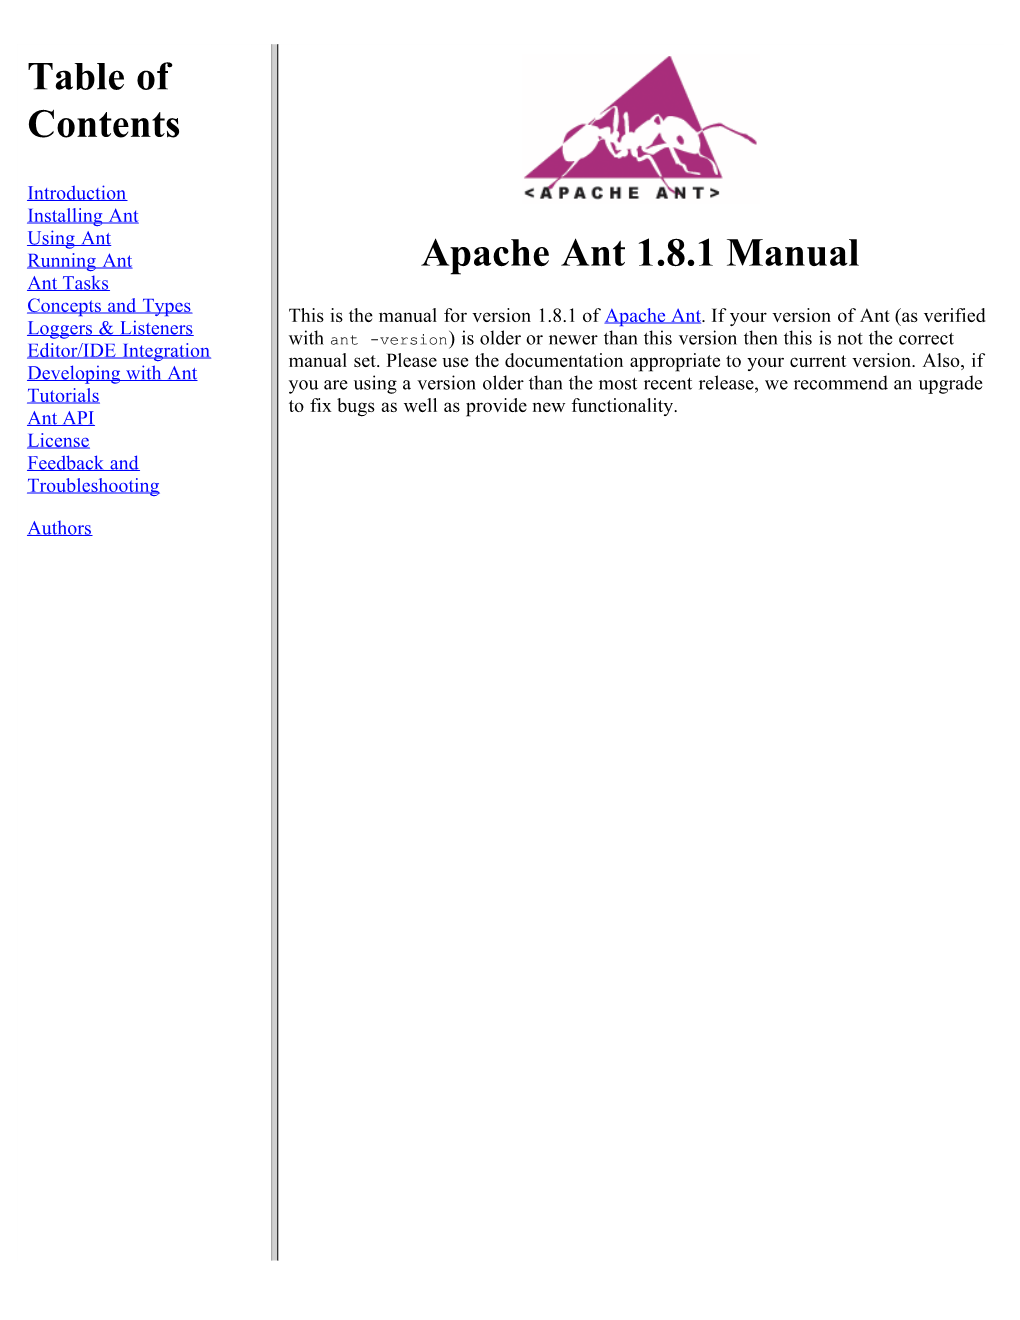 Apache Ant User Manual